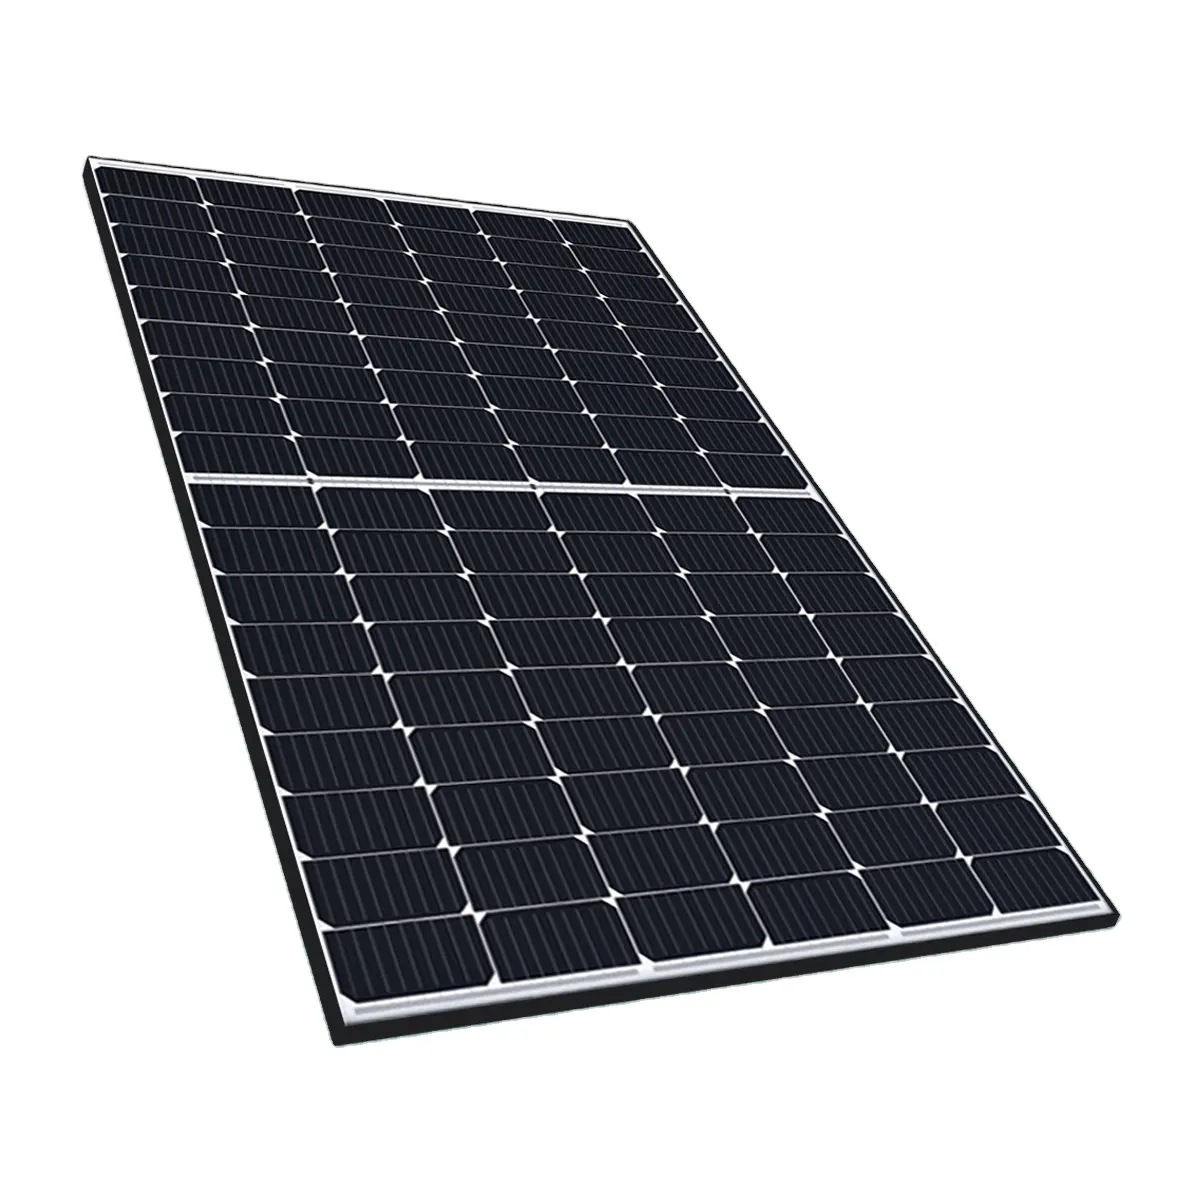 Superior Quality Half Cell Bifacial Double Glass Monocrystalline TopCon Solar Panel 405 Watt With TUV WEEE Certification